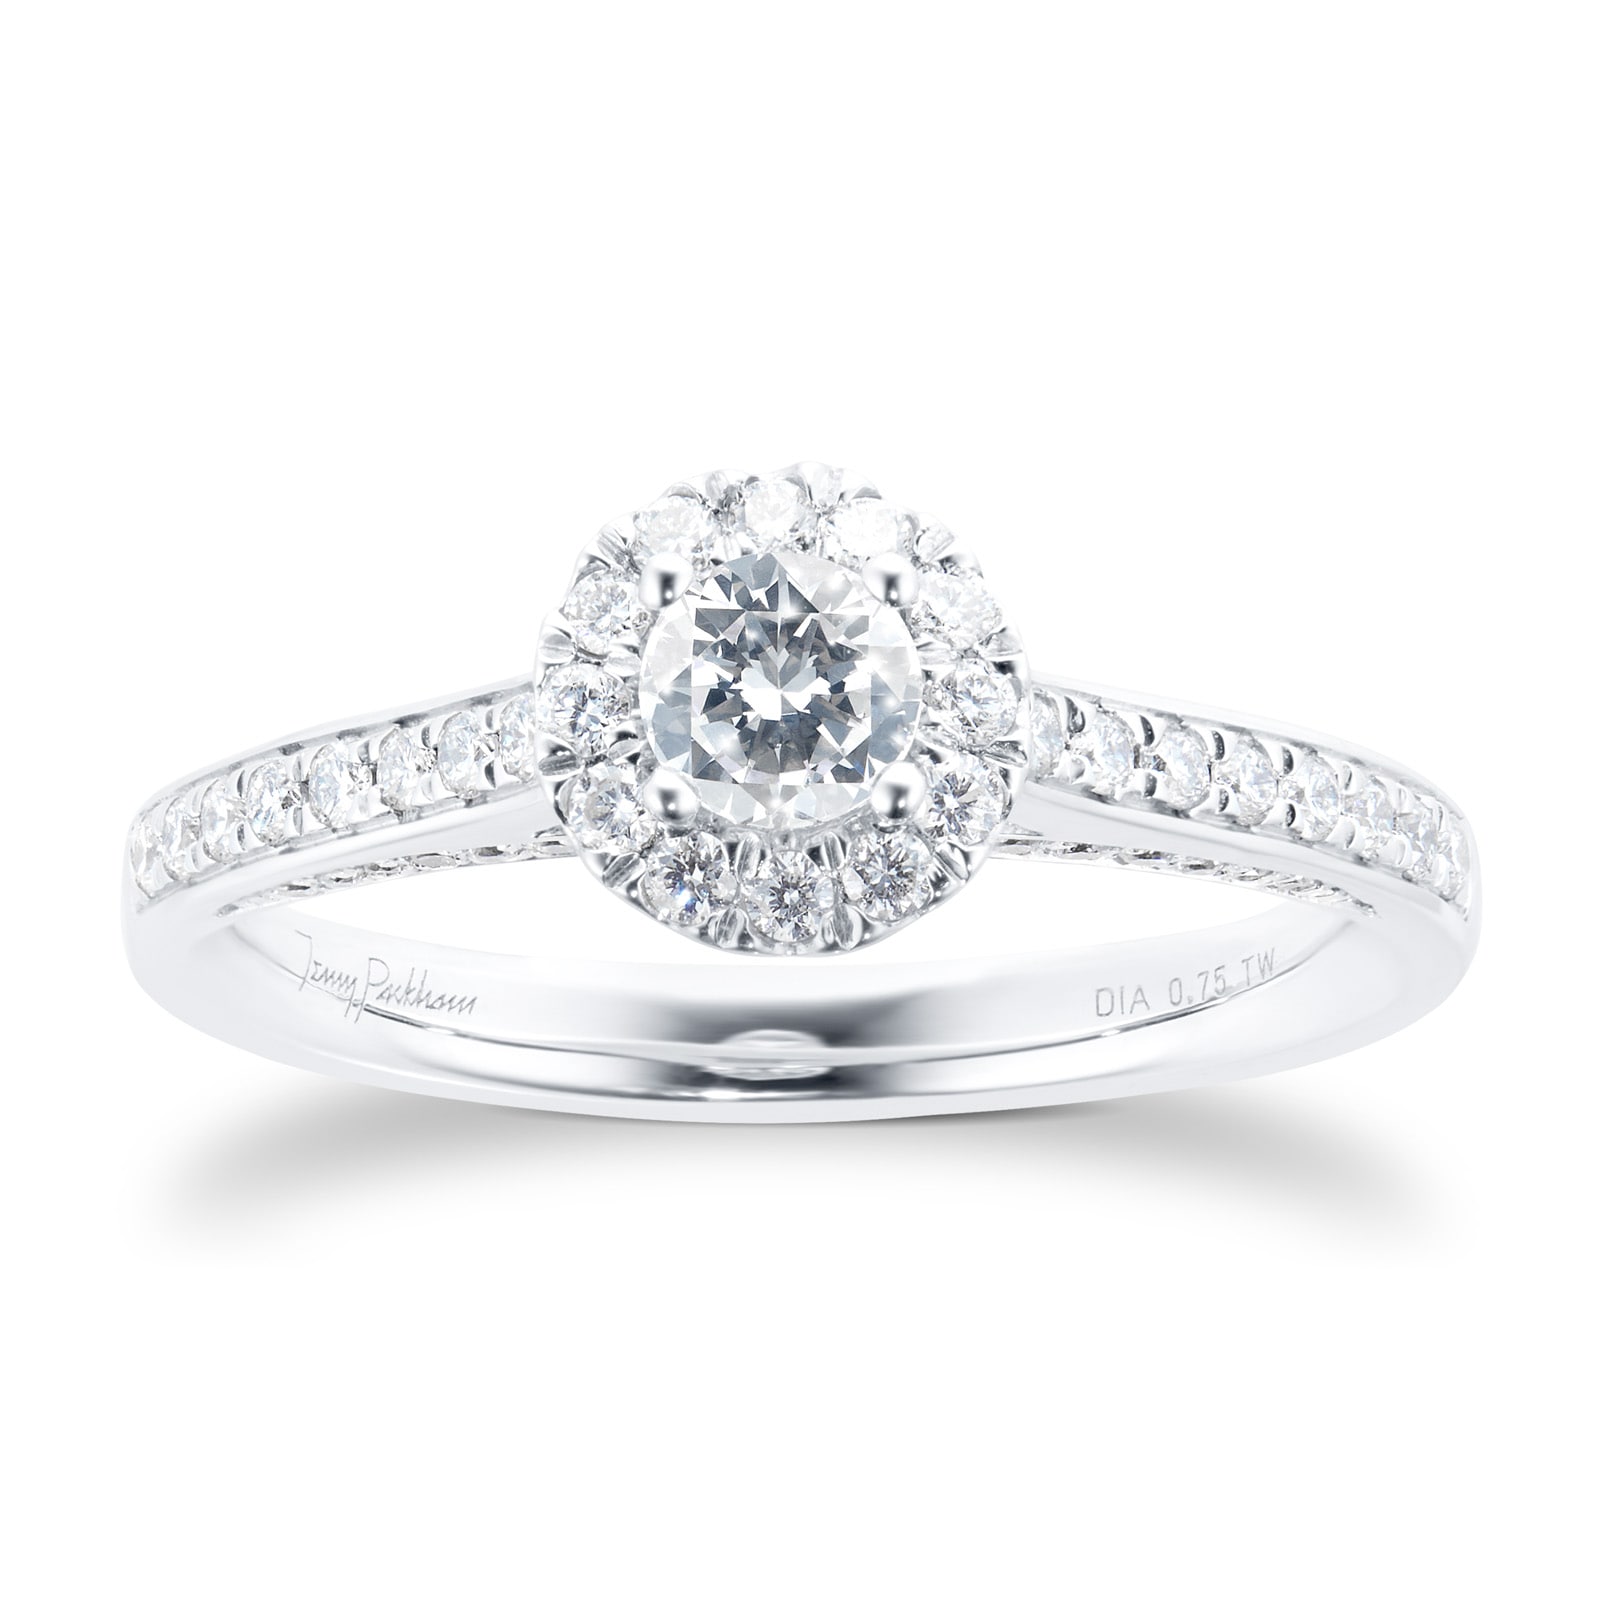 Platinum 0.75cttw Brilliant Cut Halo Diamond Ring - Ring Size N